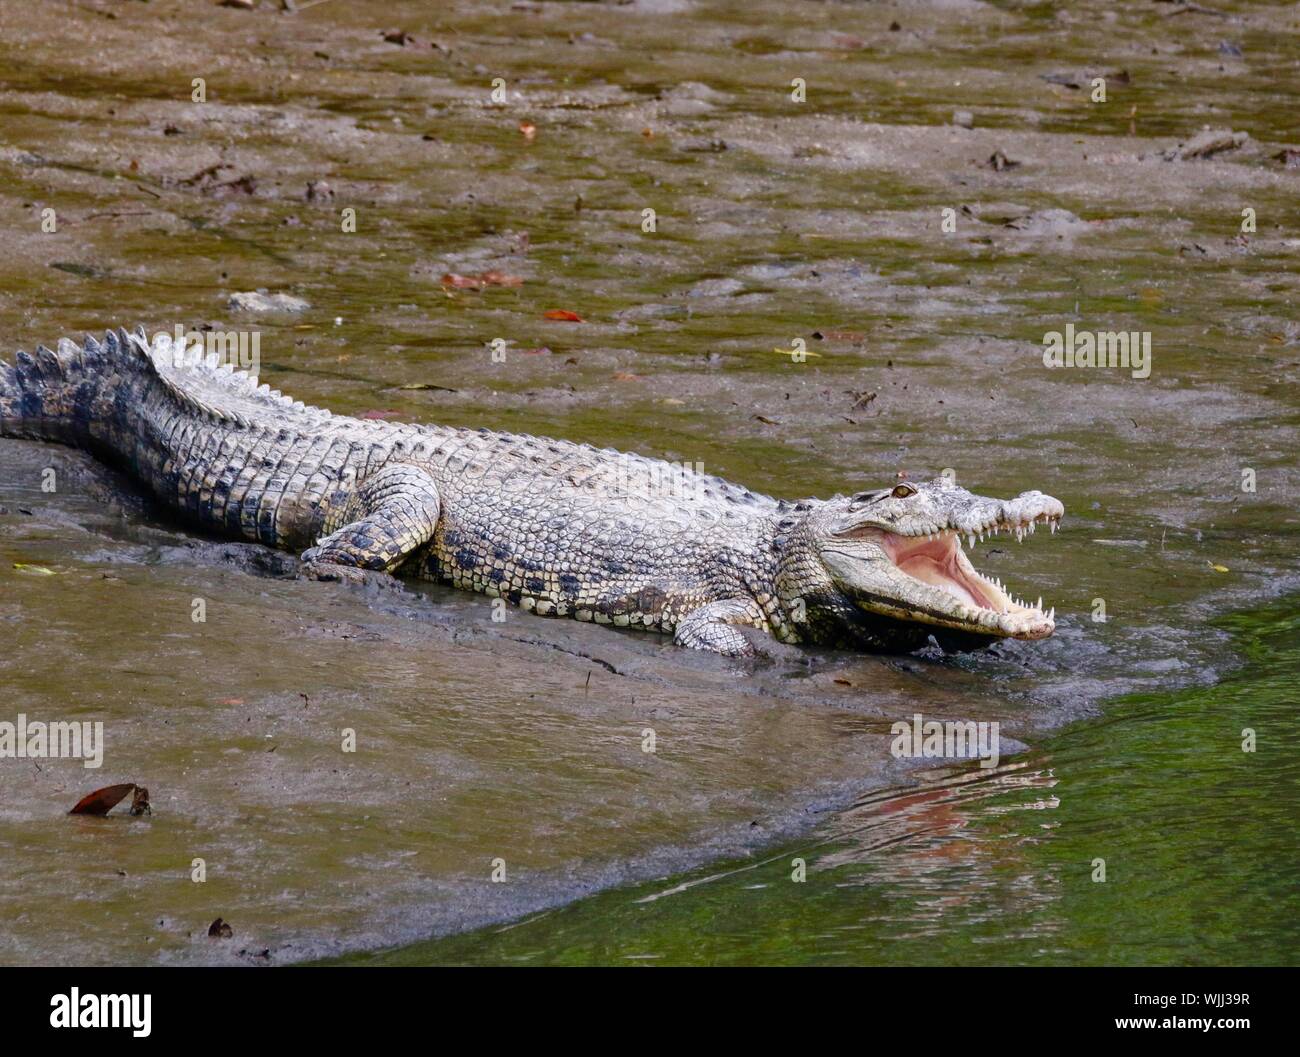 Crocodile By River Stock Photo